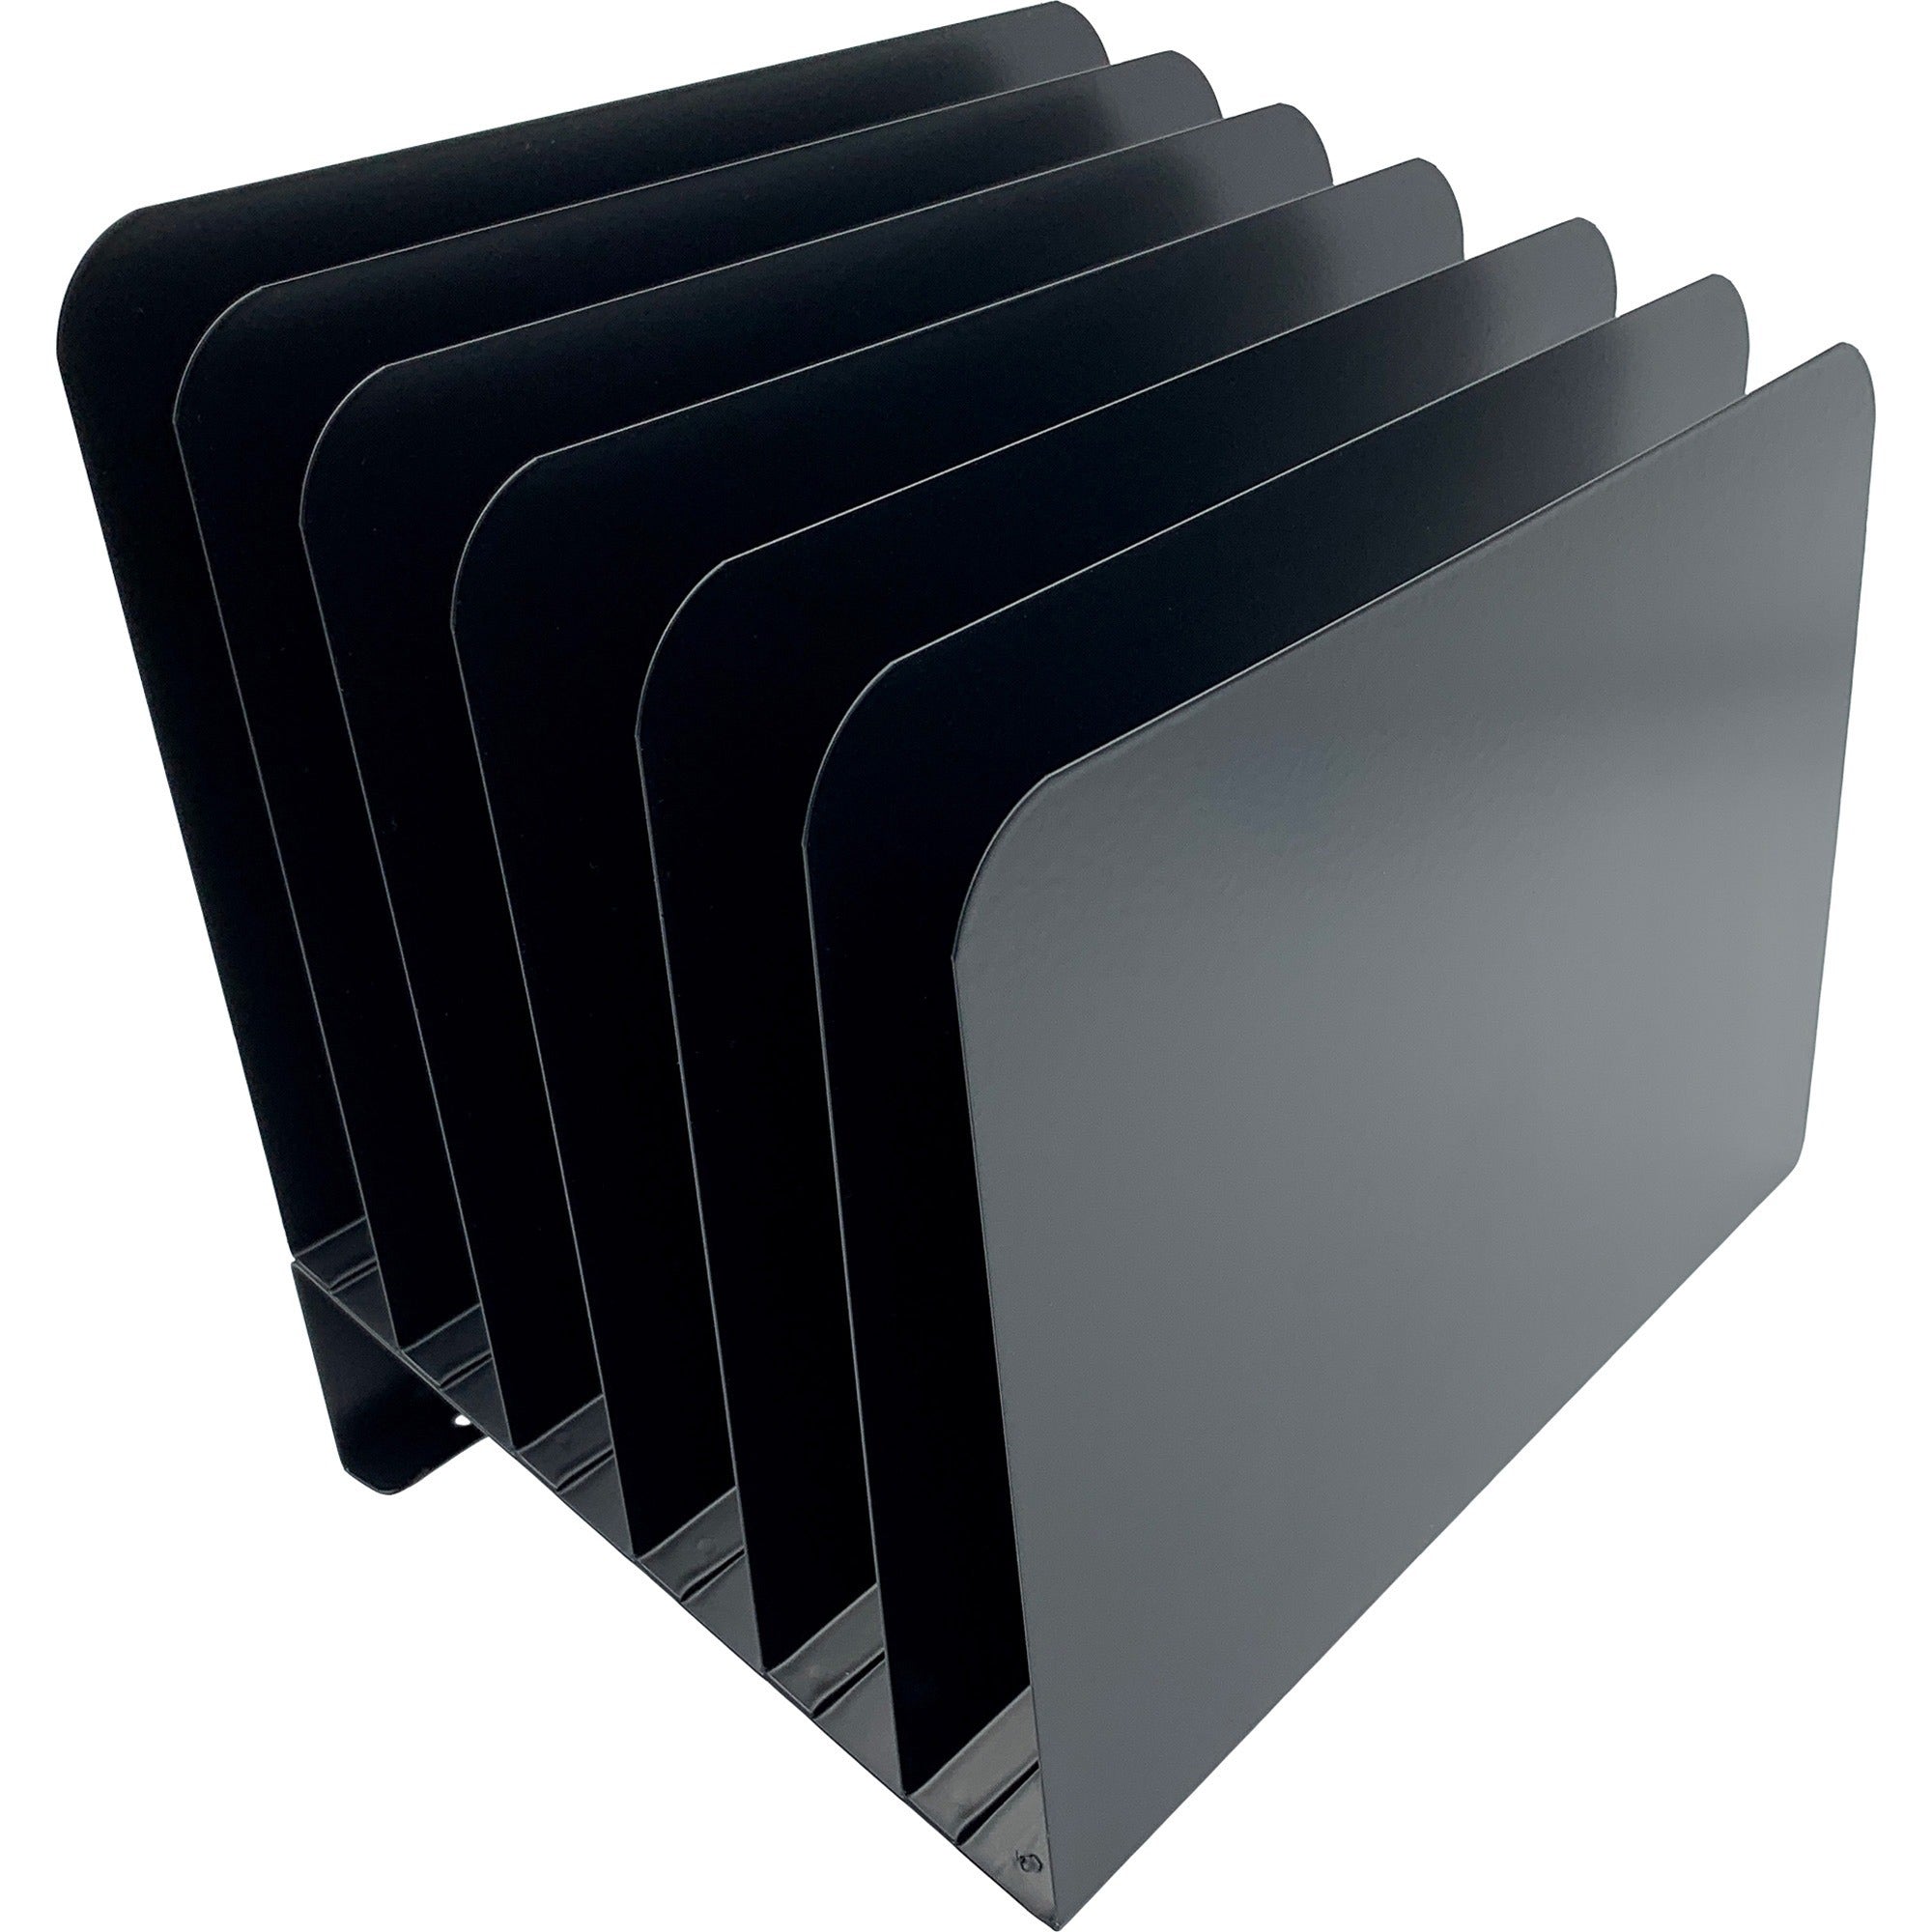 huron-slanted-vertical-slots-desktop-organizer-8-compartments-vertical-10-height-x-98-width-x-11-depth-durable-black-steel-1-each_hurhasz0156 - 2